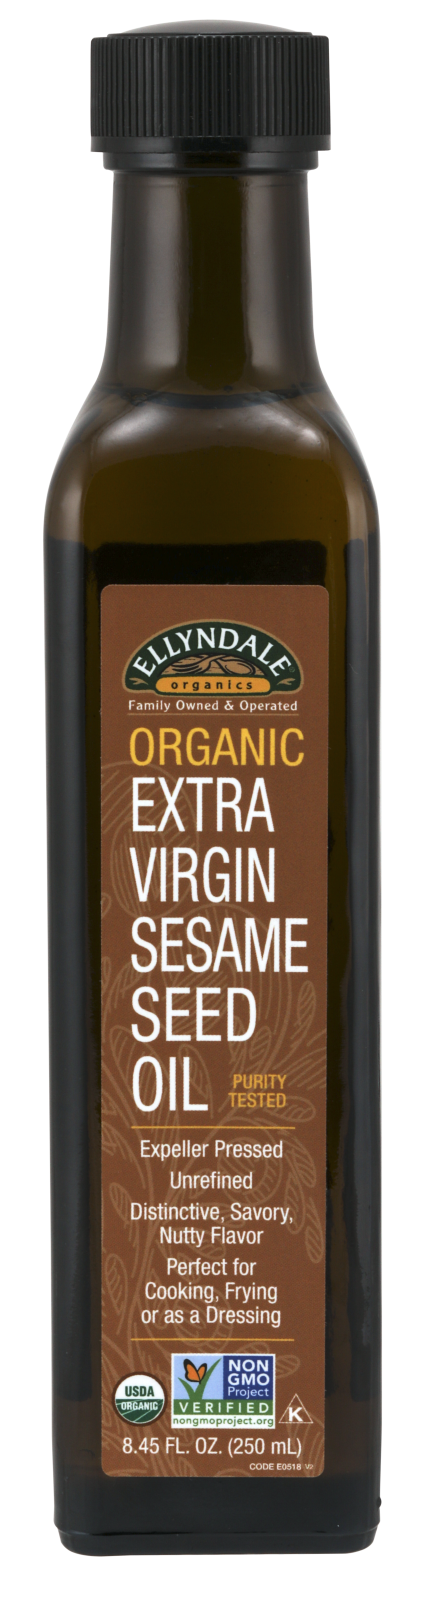 Extra Virgin Sesame Seed Oil, Organic - 8.45 oz.